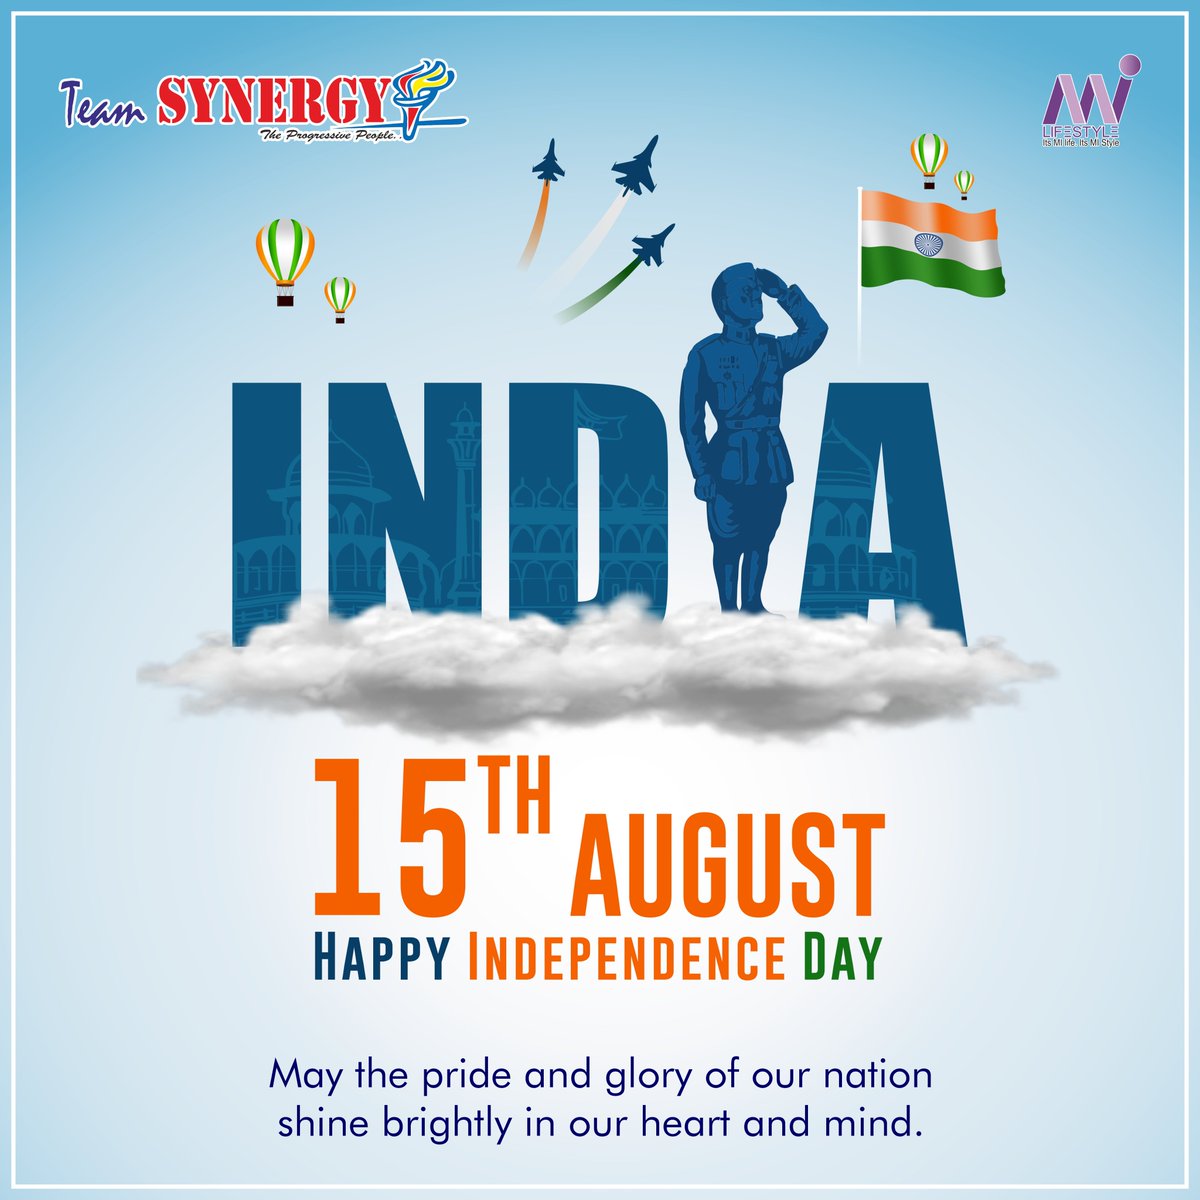 📷Happy Independence Day📷
#15august #independenceday #independencedayindia #TeamSYNERGY #theprogressivepeople #milifestyle #milifestylemarketingglobalpvtltd